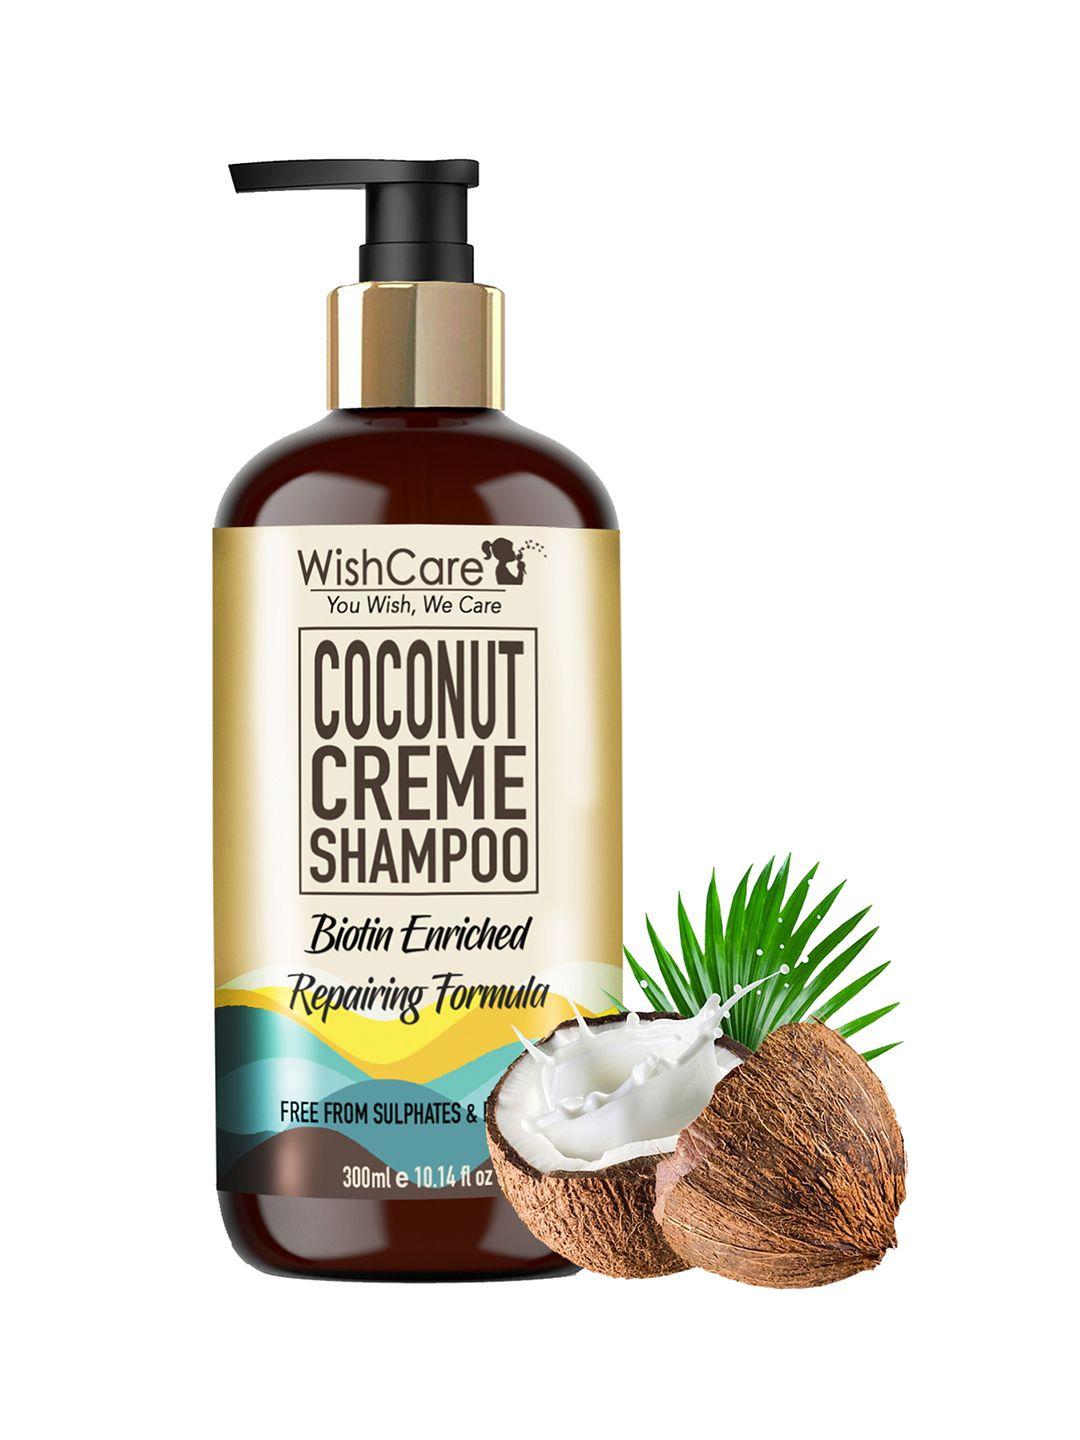 wishcare unisex coconut creme repairing formula shampoo 300ml